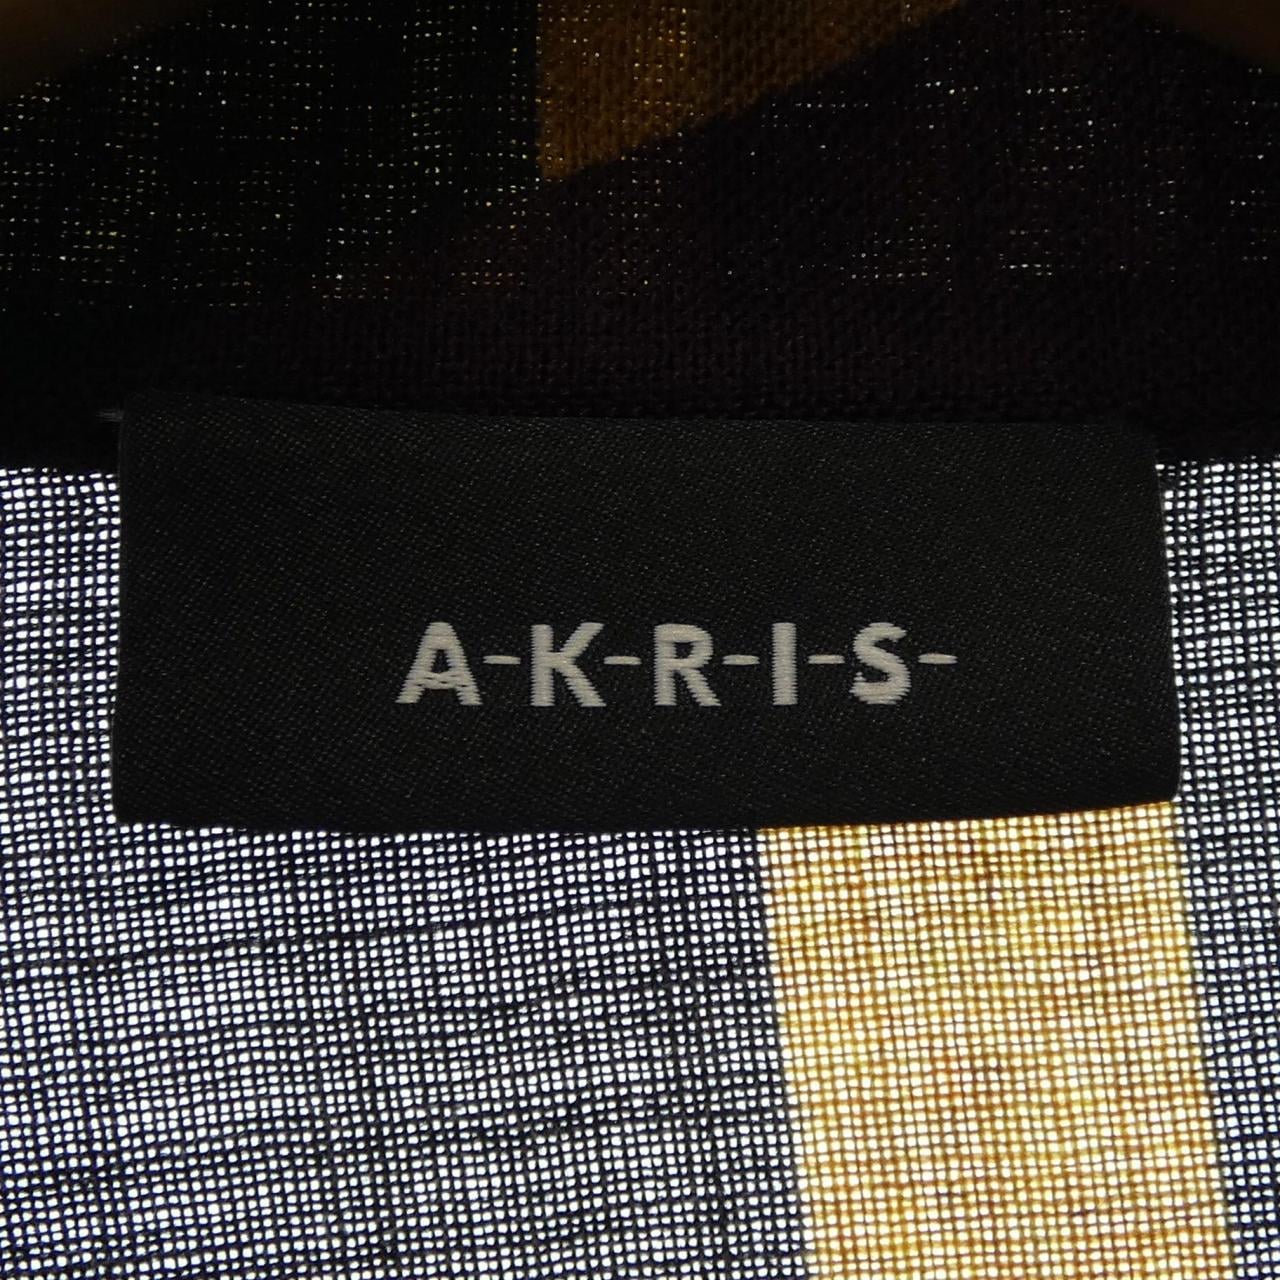 AKRIS shirt